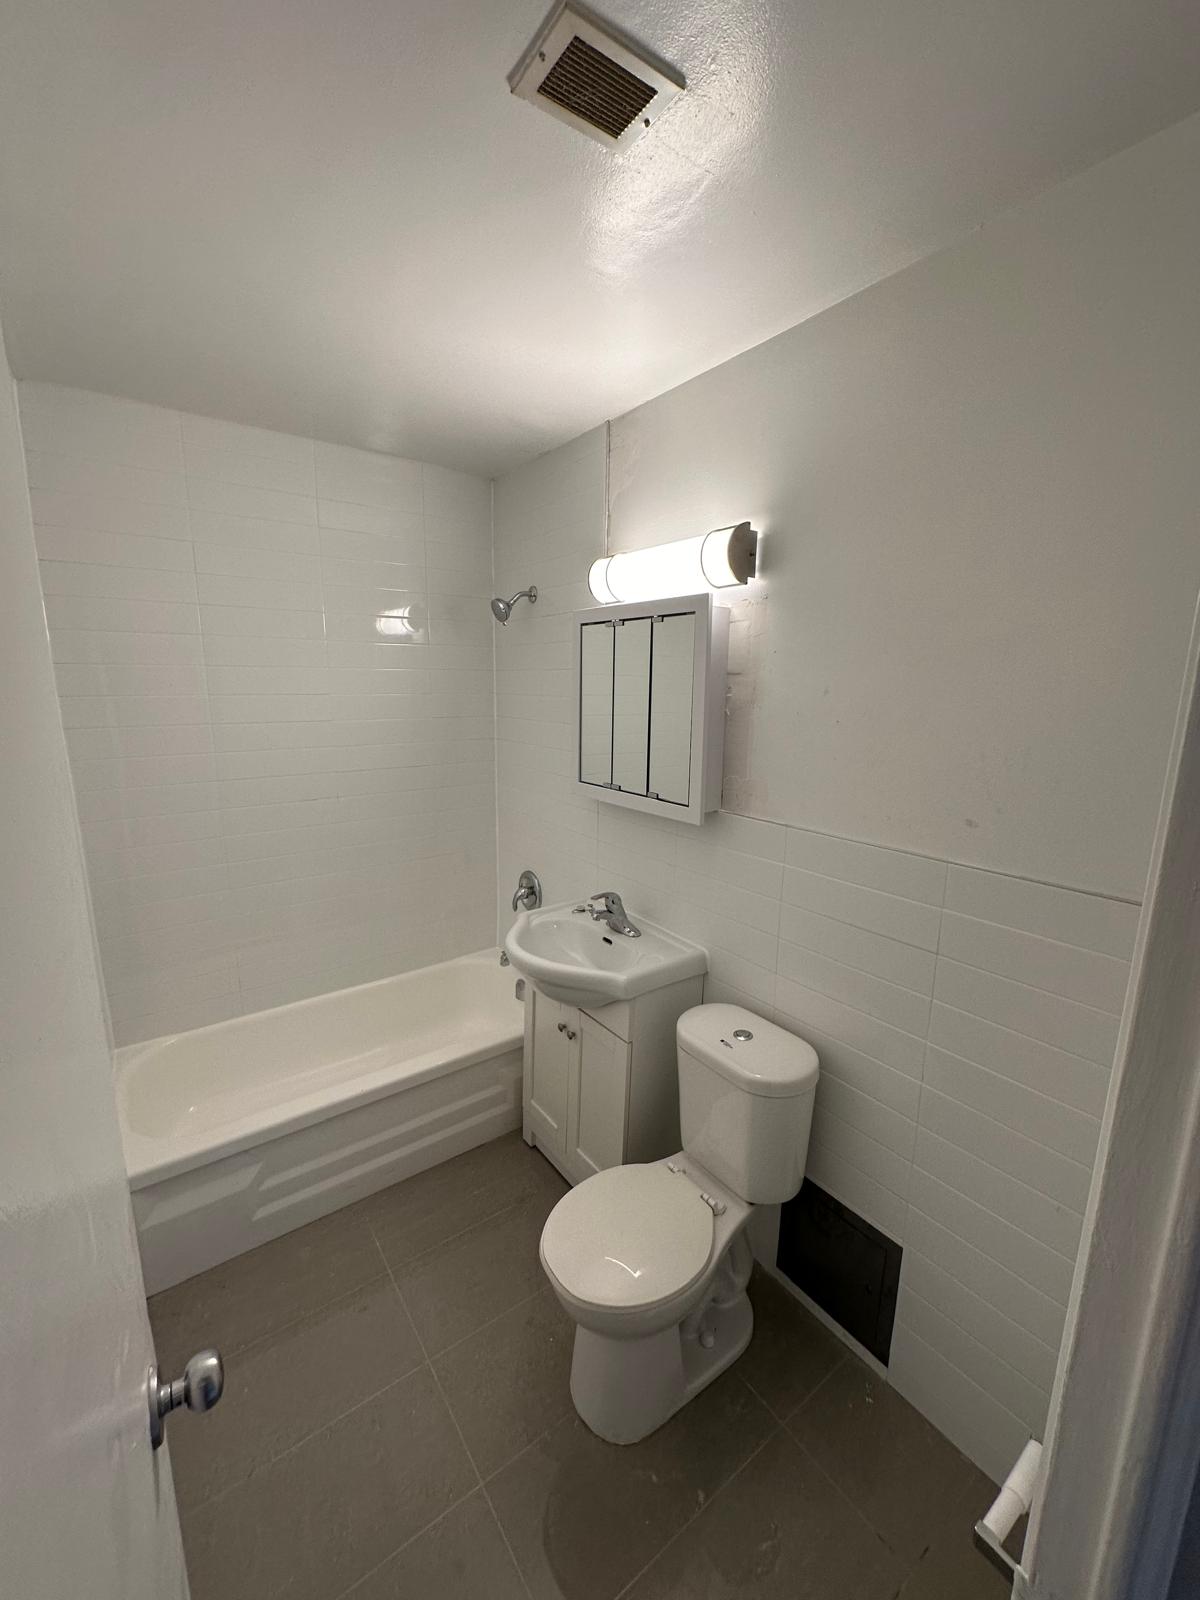 Condo Renovation Picture: Bathroom